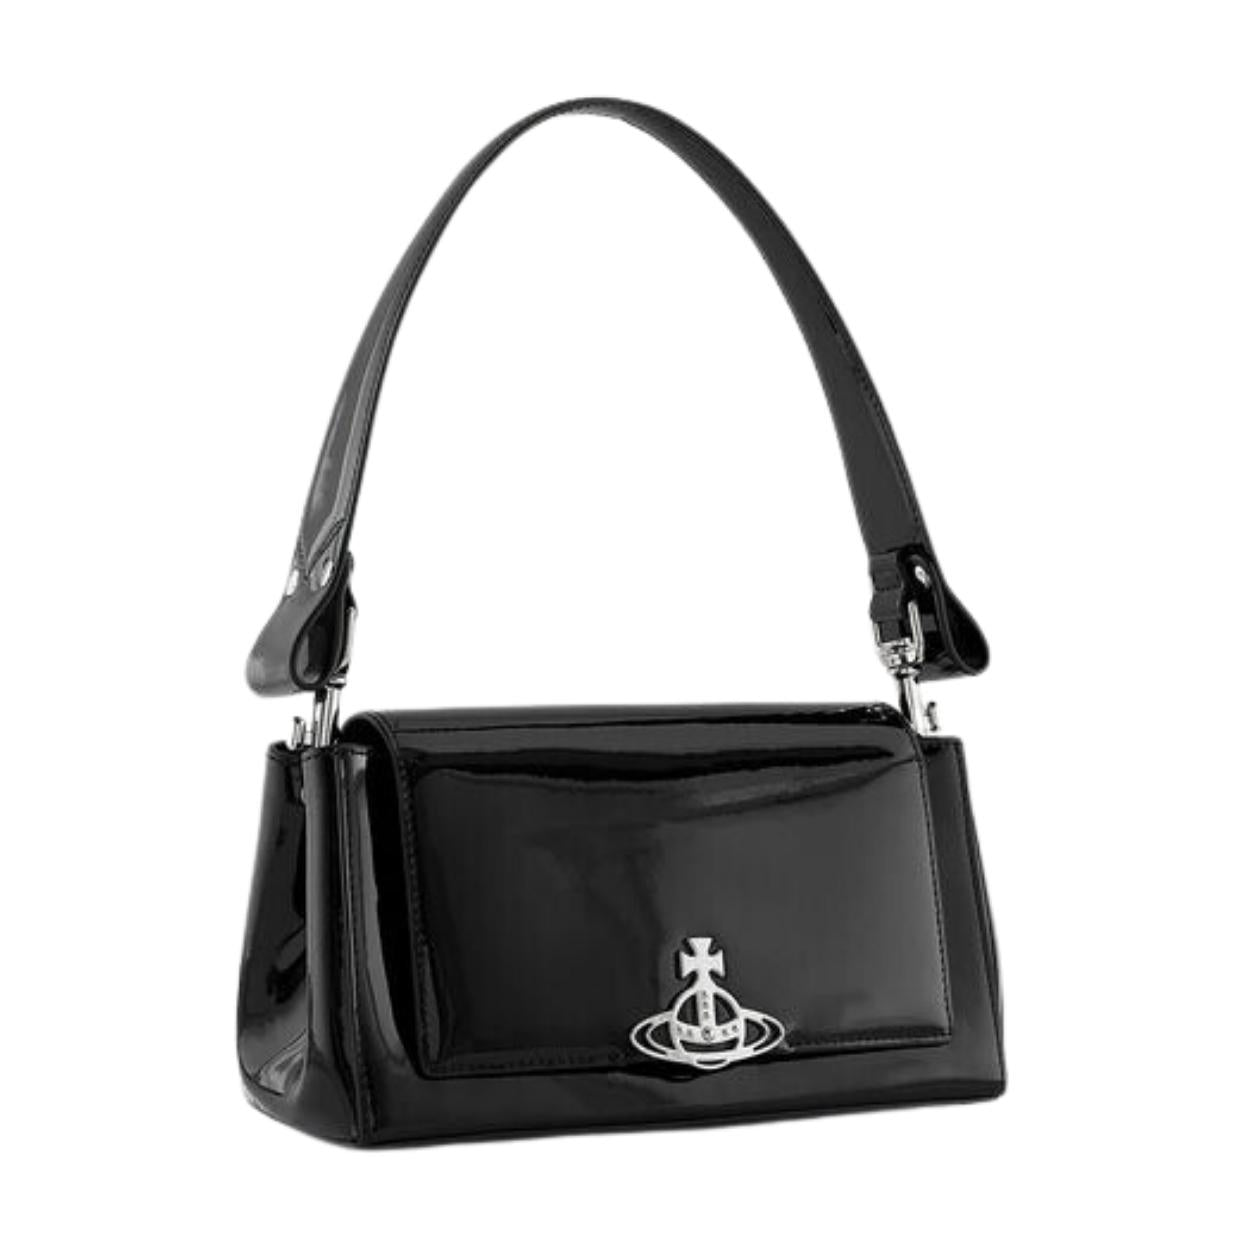 Vivienne Westwood Hazel Medium Shiny Patent Black Handbag